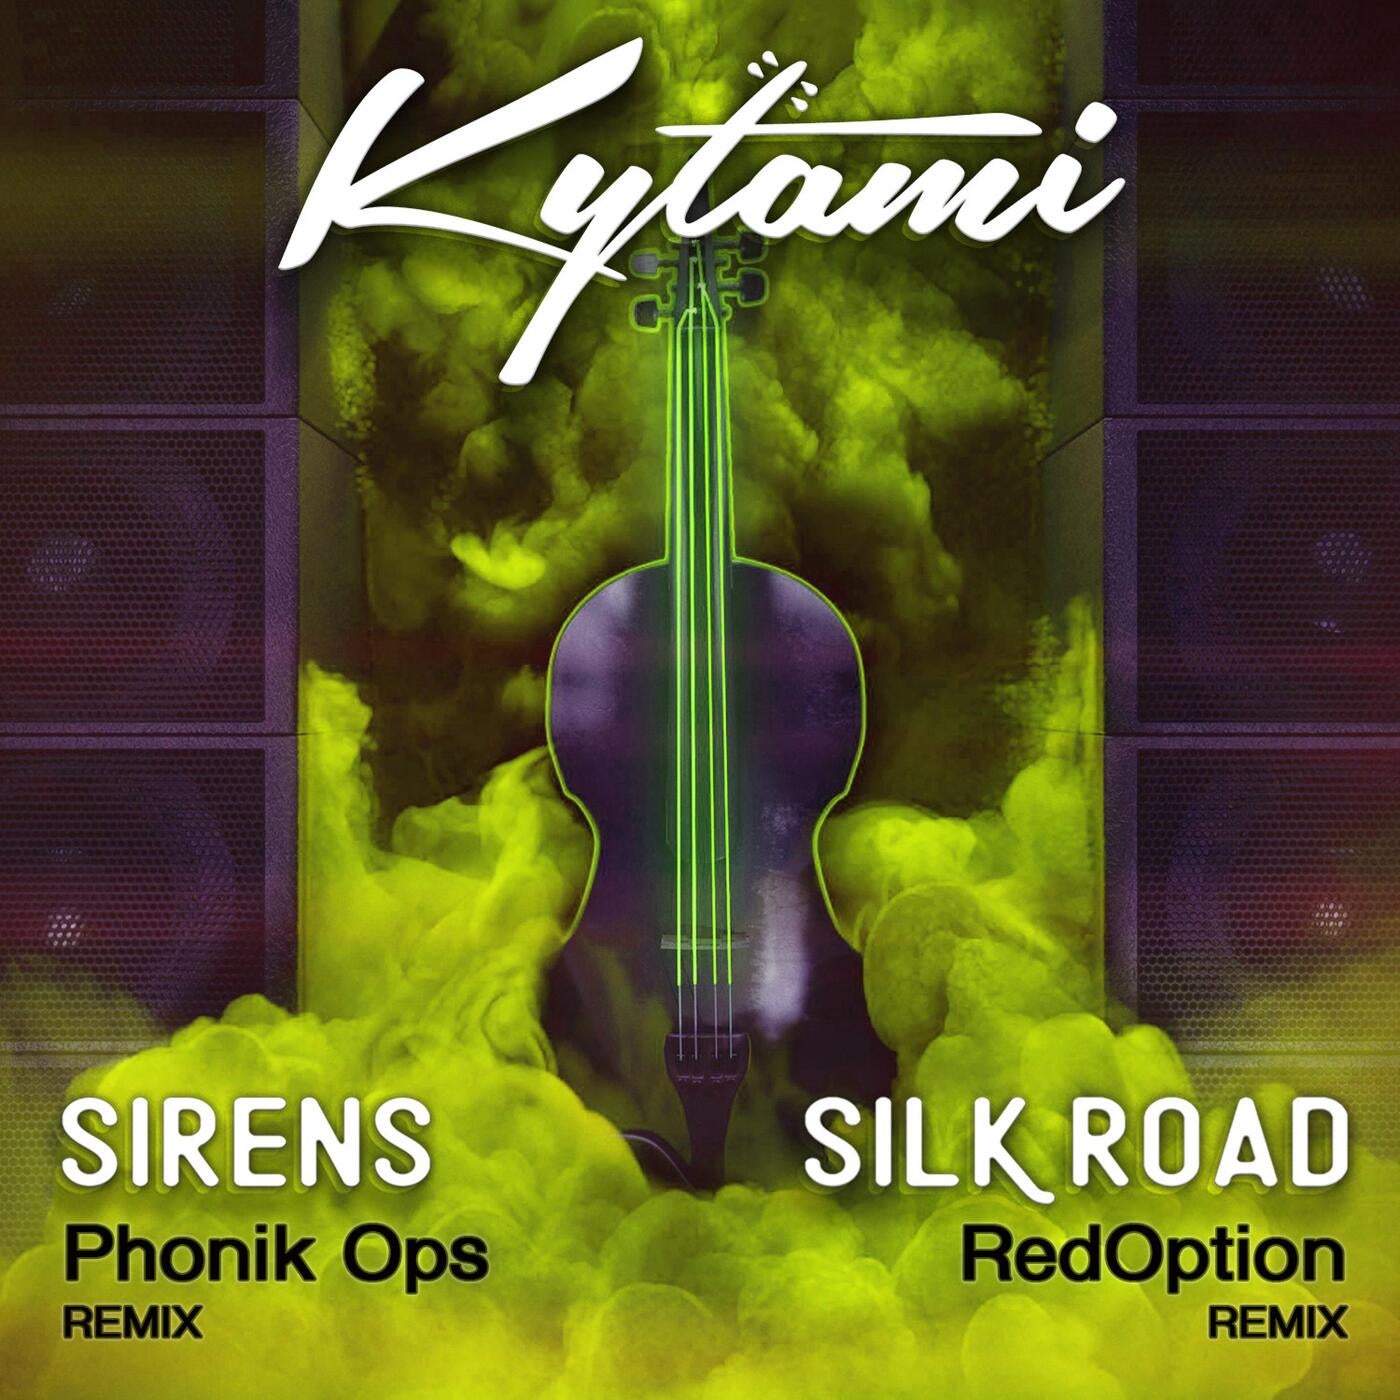 Sirens (Phonik Ops Remix) / Silk Road [RedOption Remix]